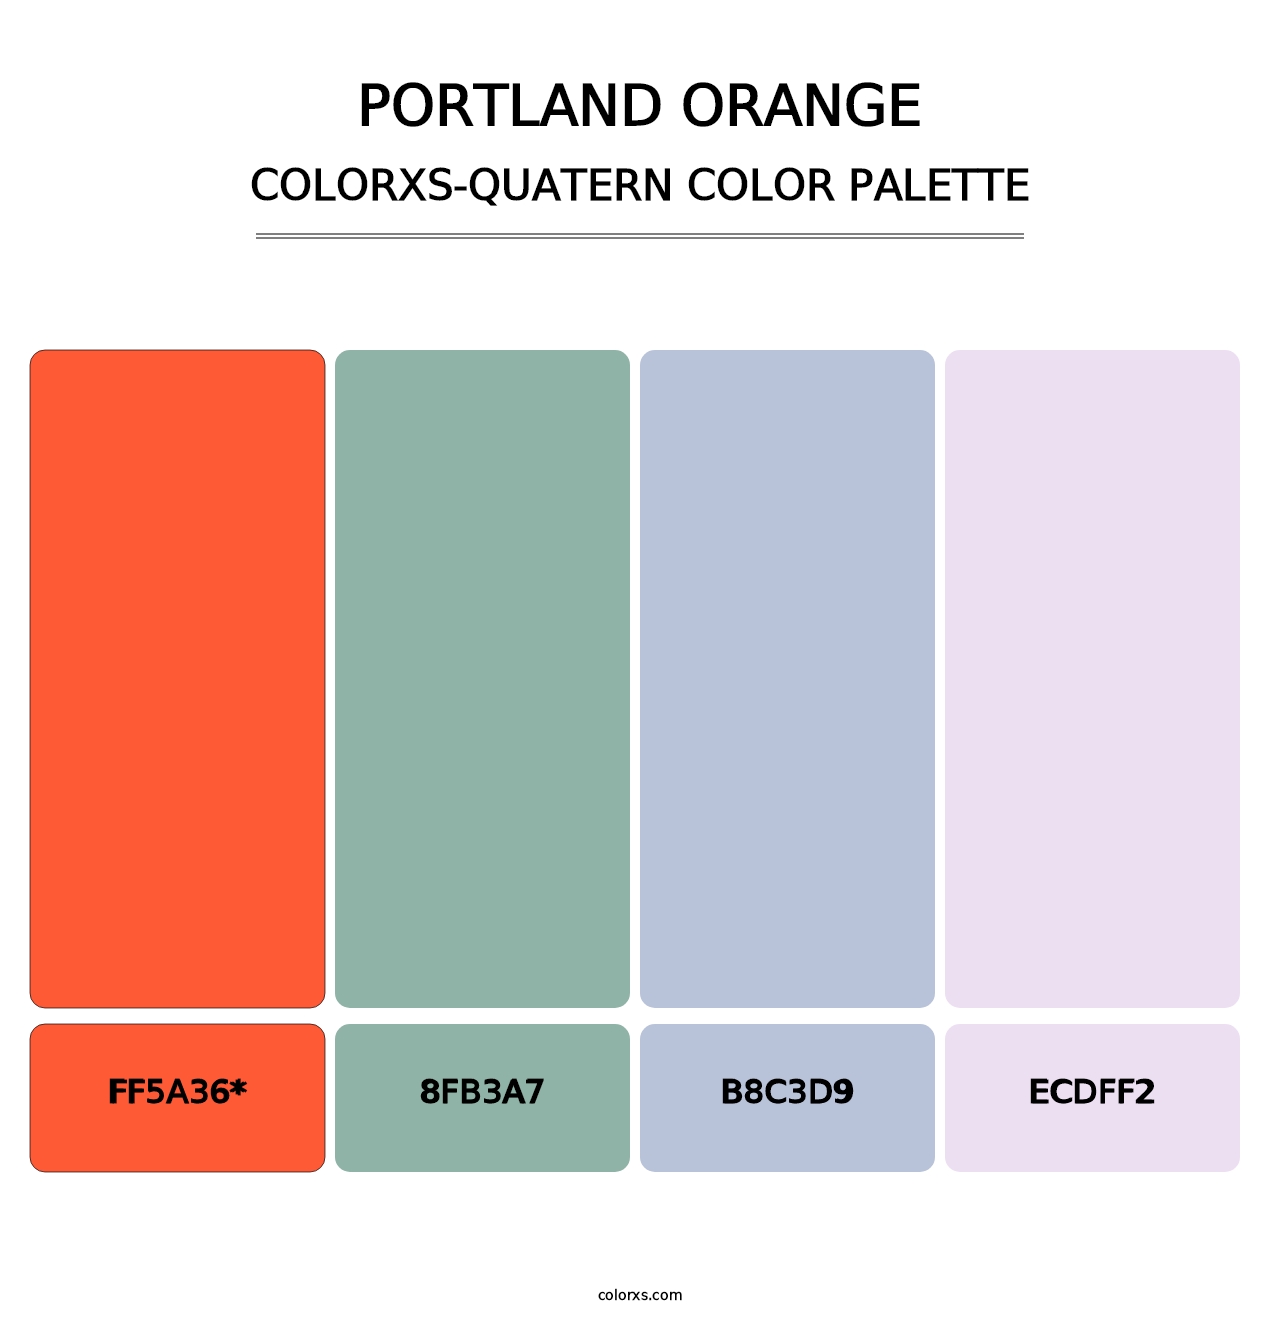 Portland Orange - Colorxs Quatern Palette